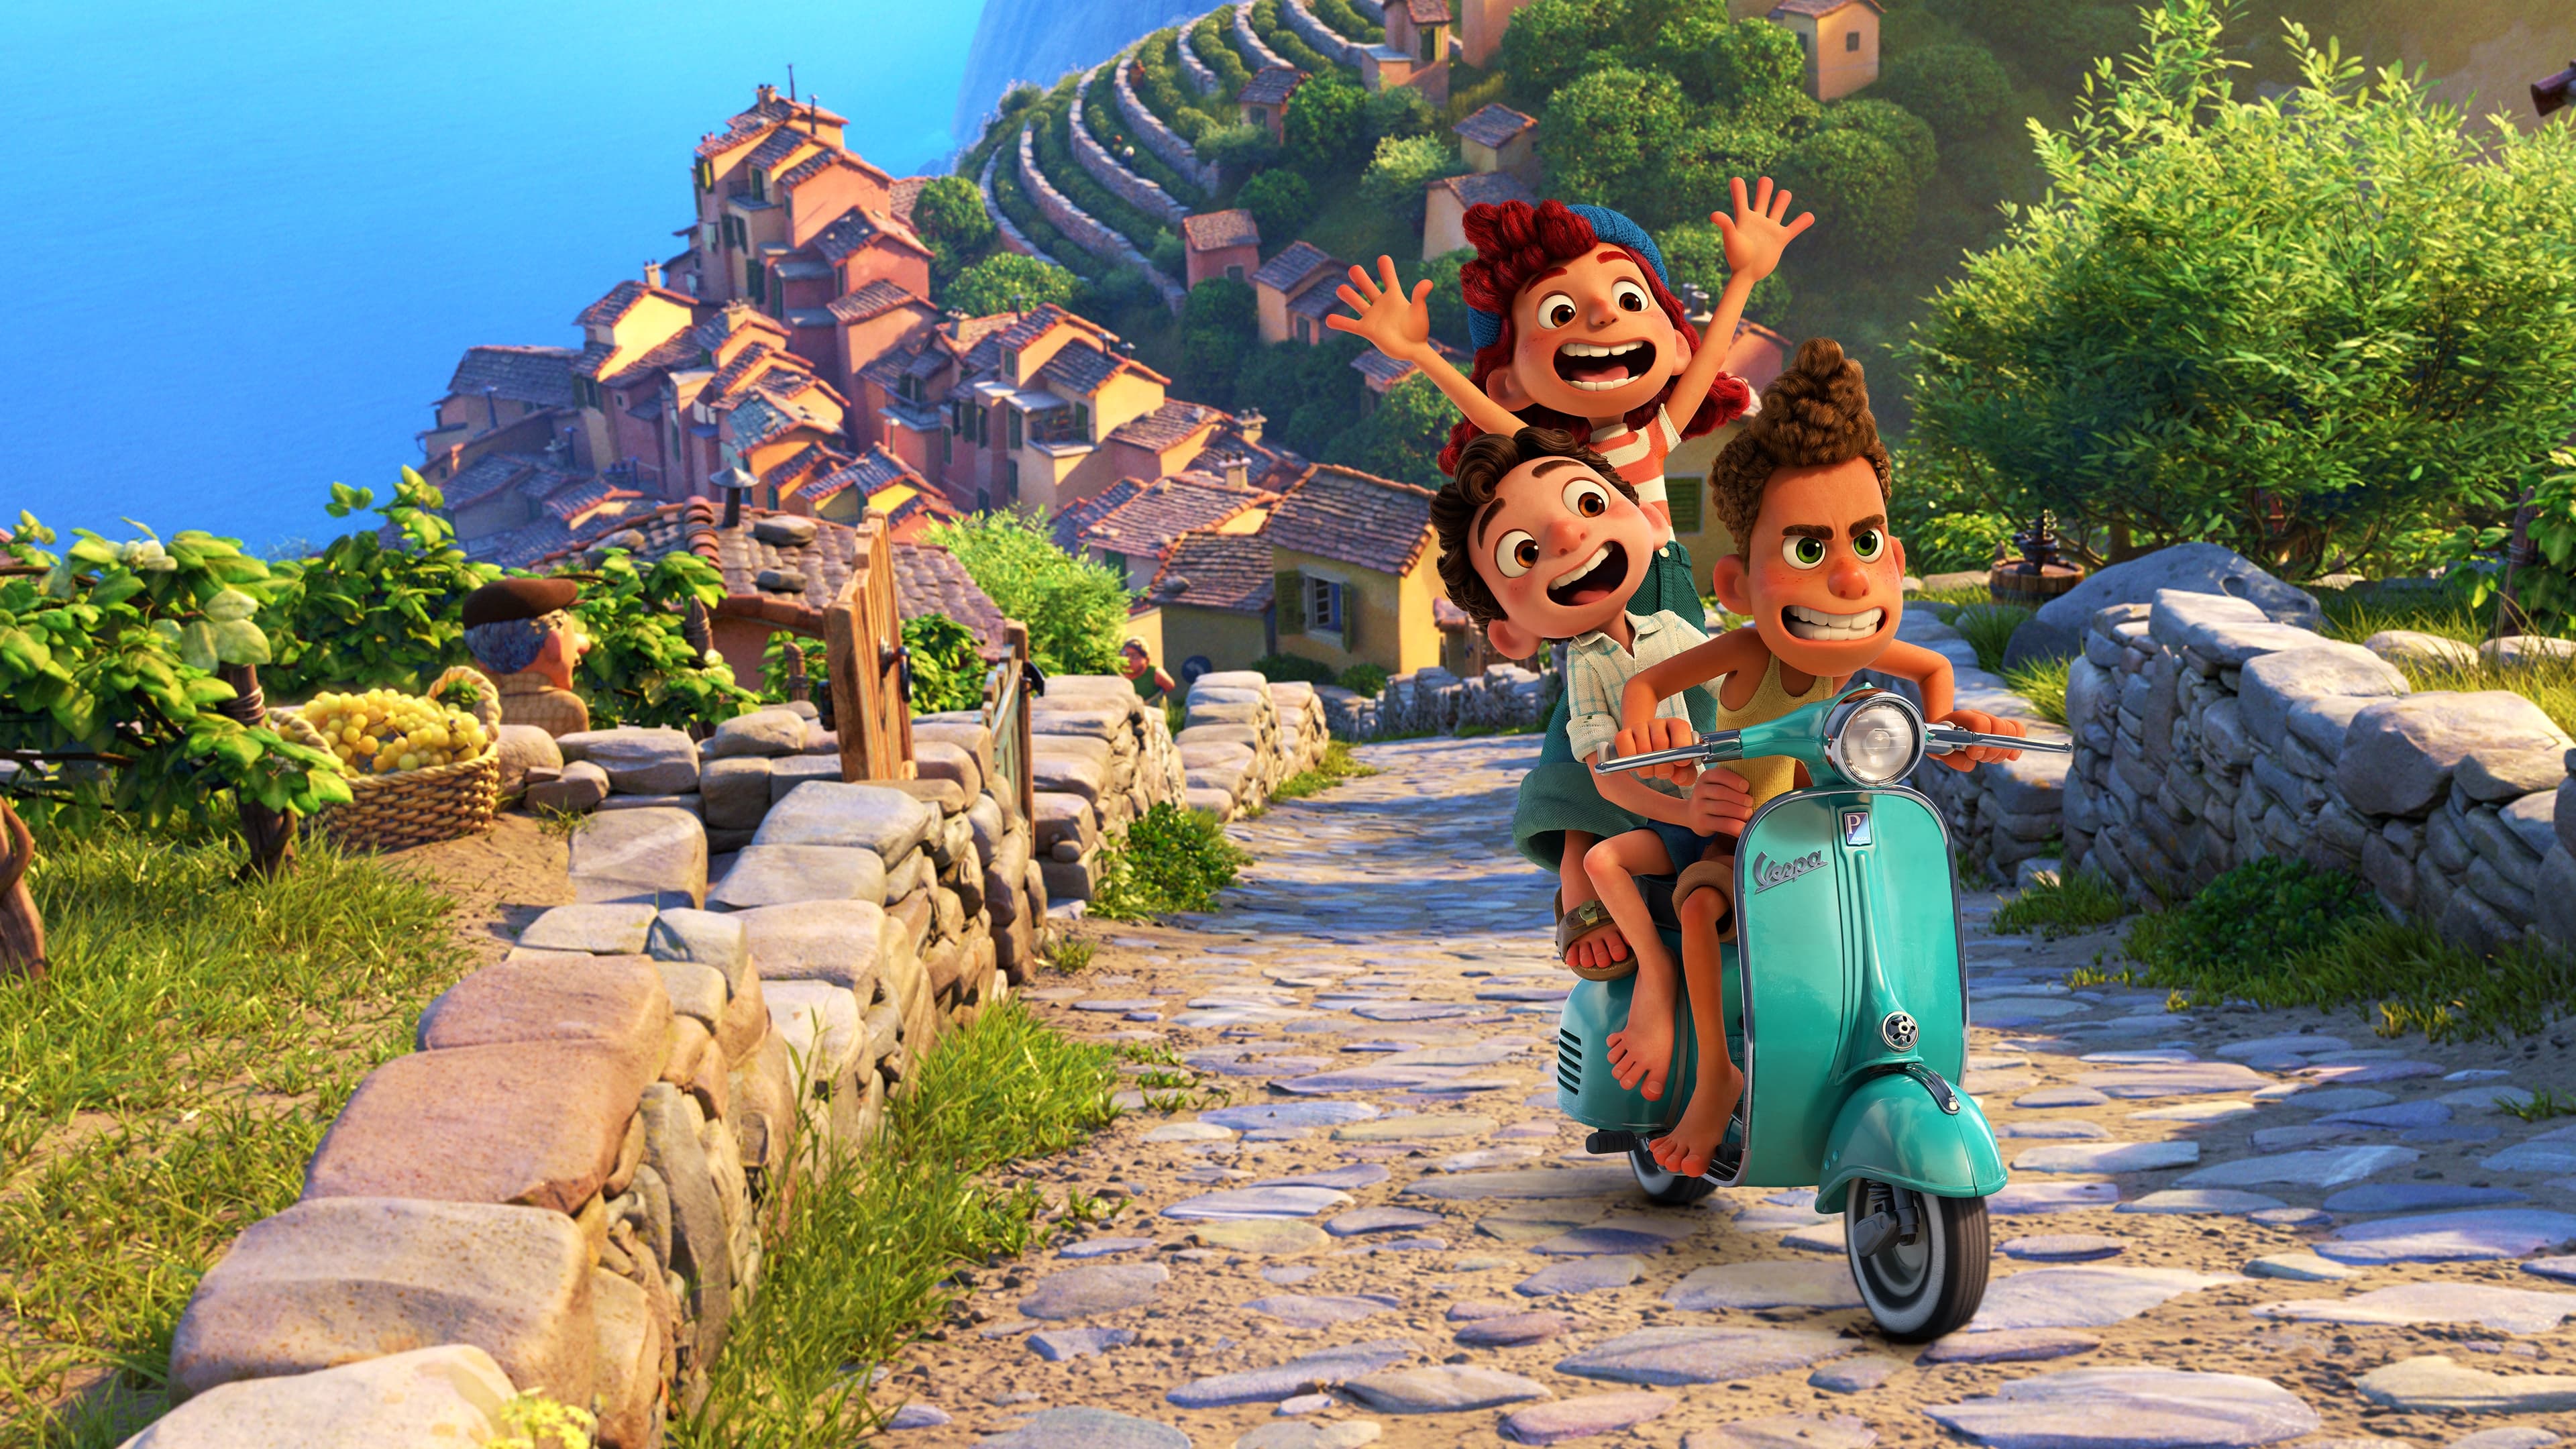 Adventurous Friendship Growing Up Animation Pixar Oscar Golden Globes